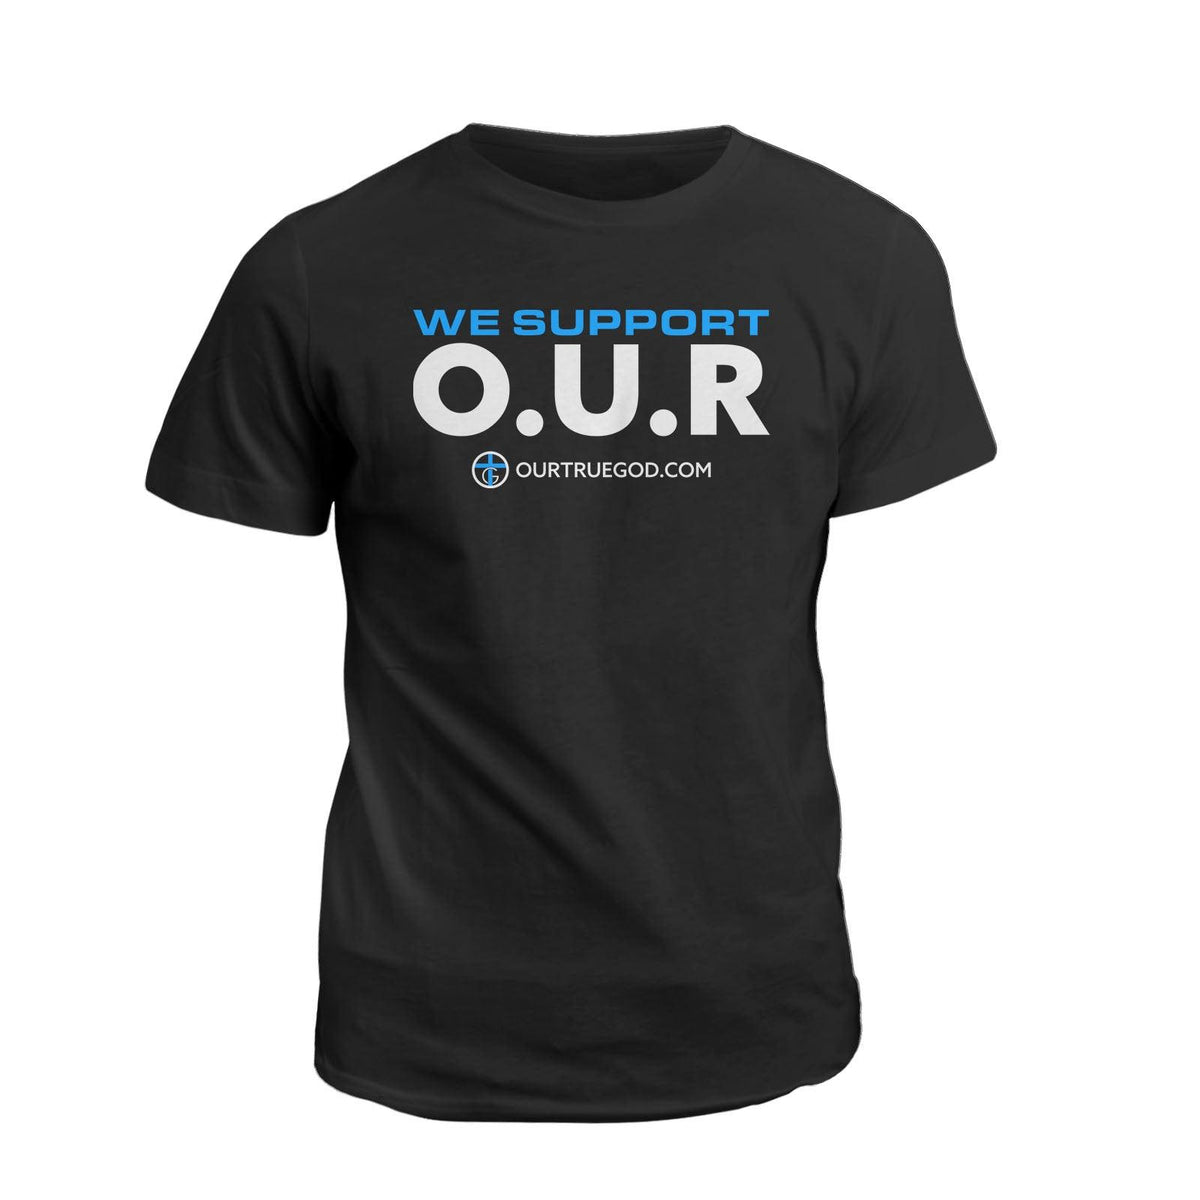 We Support O.U.R - Our True God